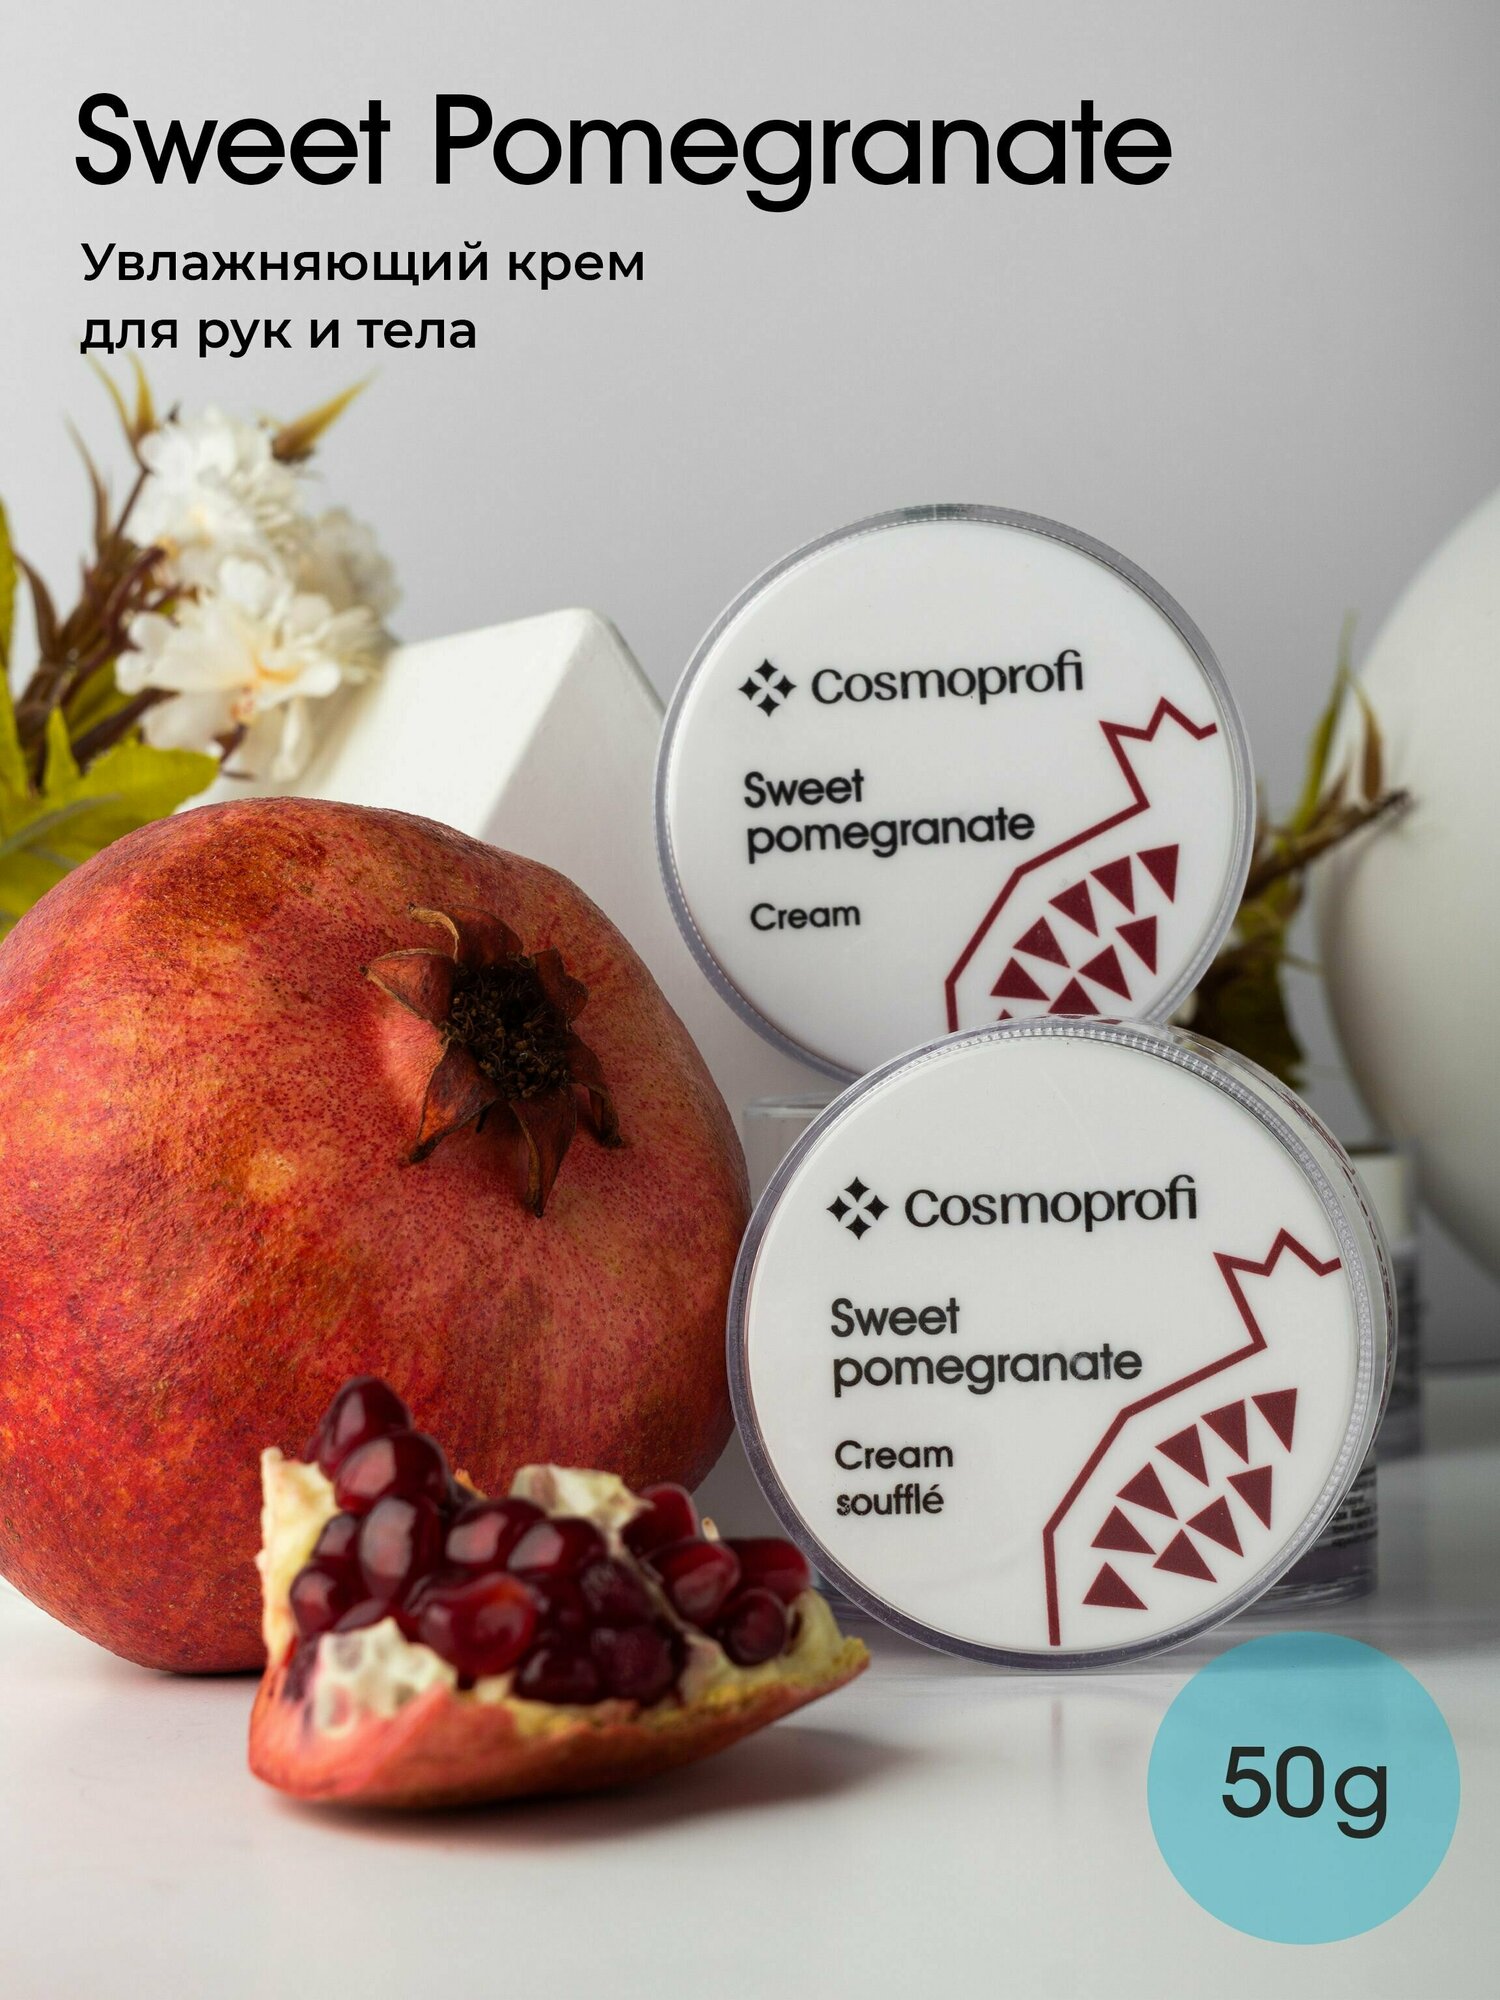 Крем для рук и тела Cosmoprofi Sweet pomegranate, 50г